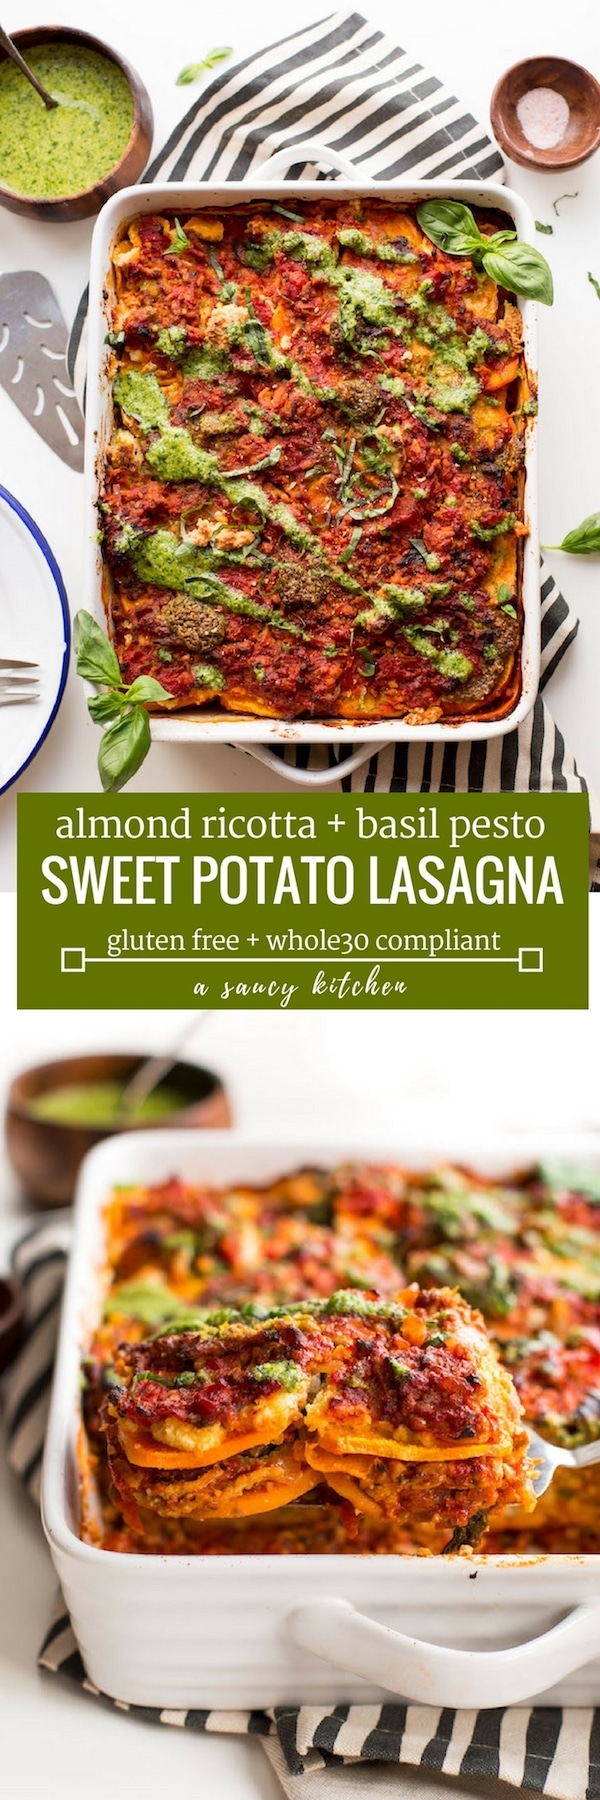 paleo sweet potato lasagna with almond ricotta & basil pesto